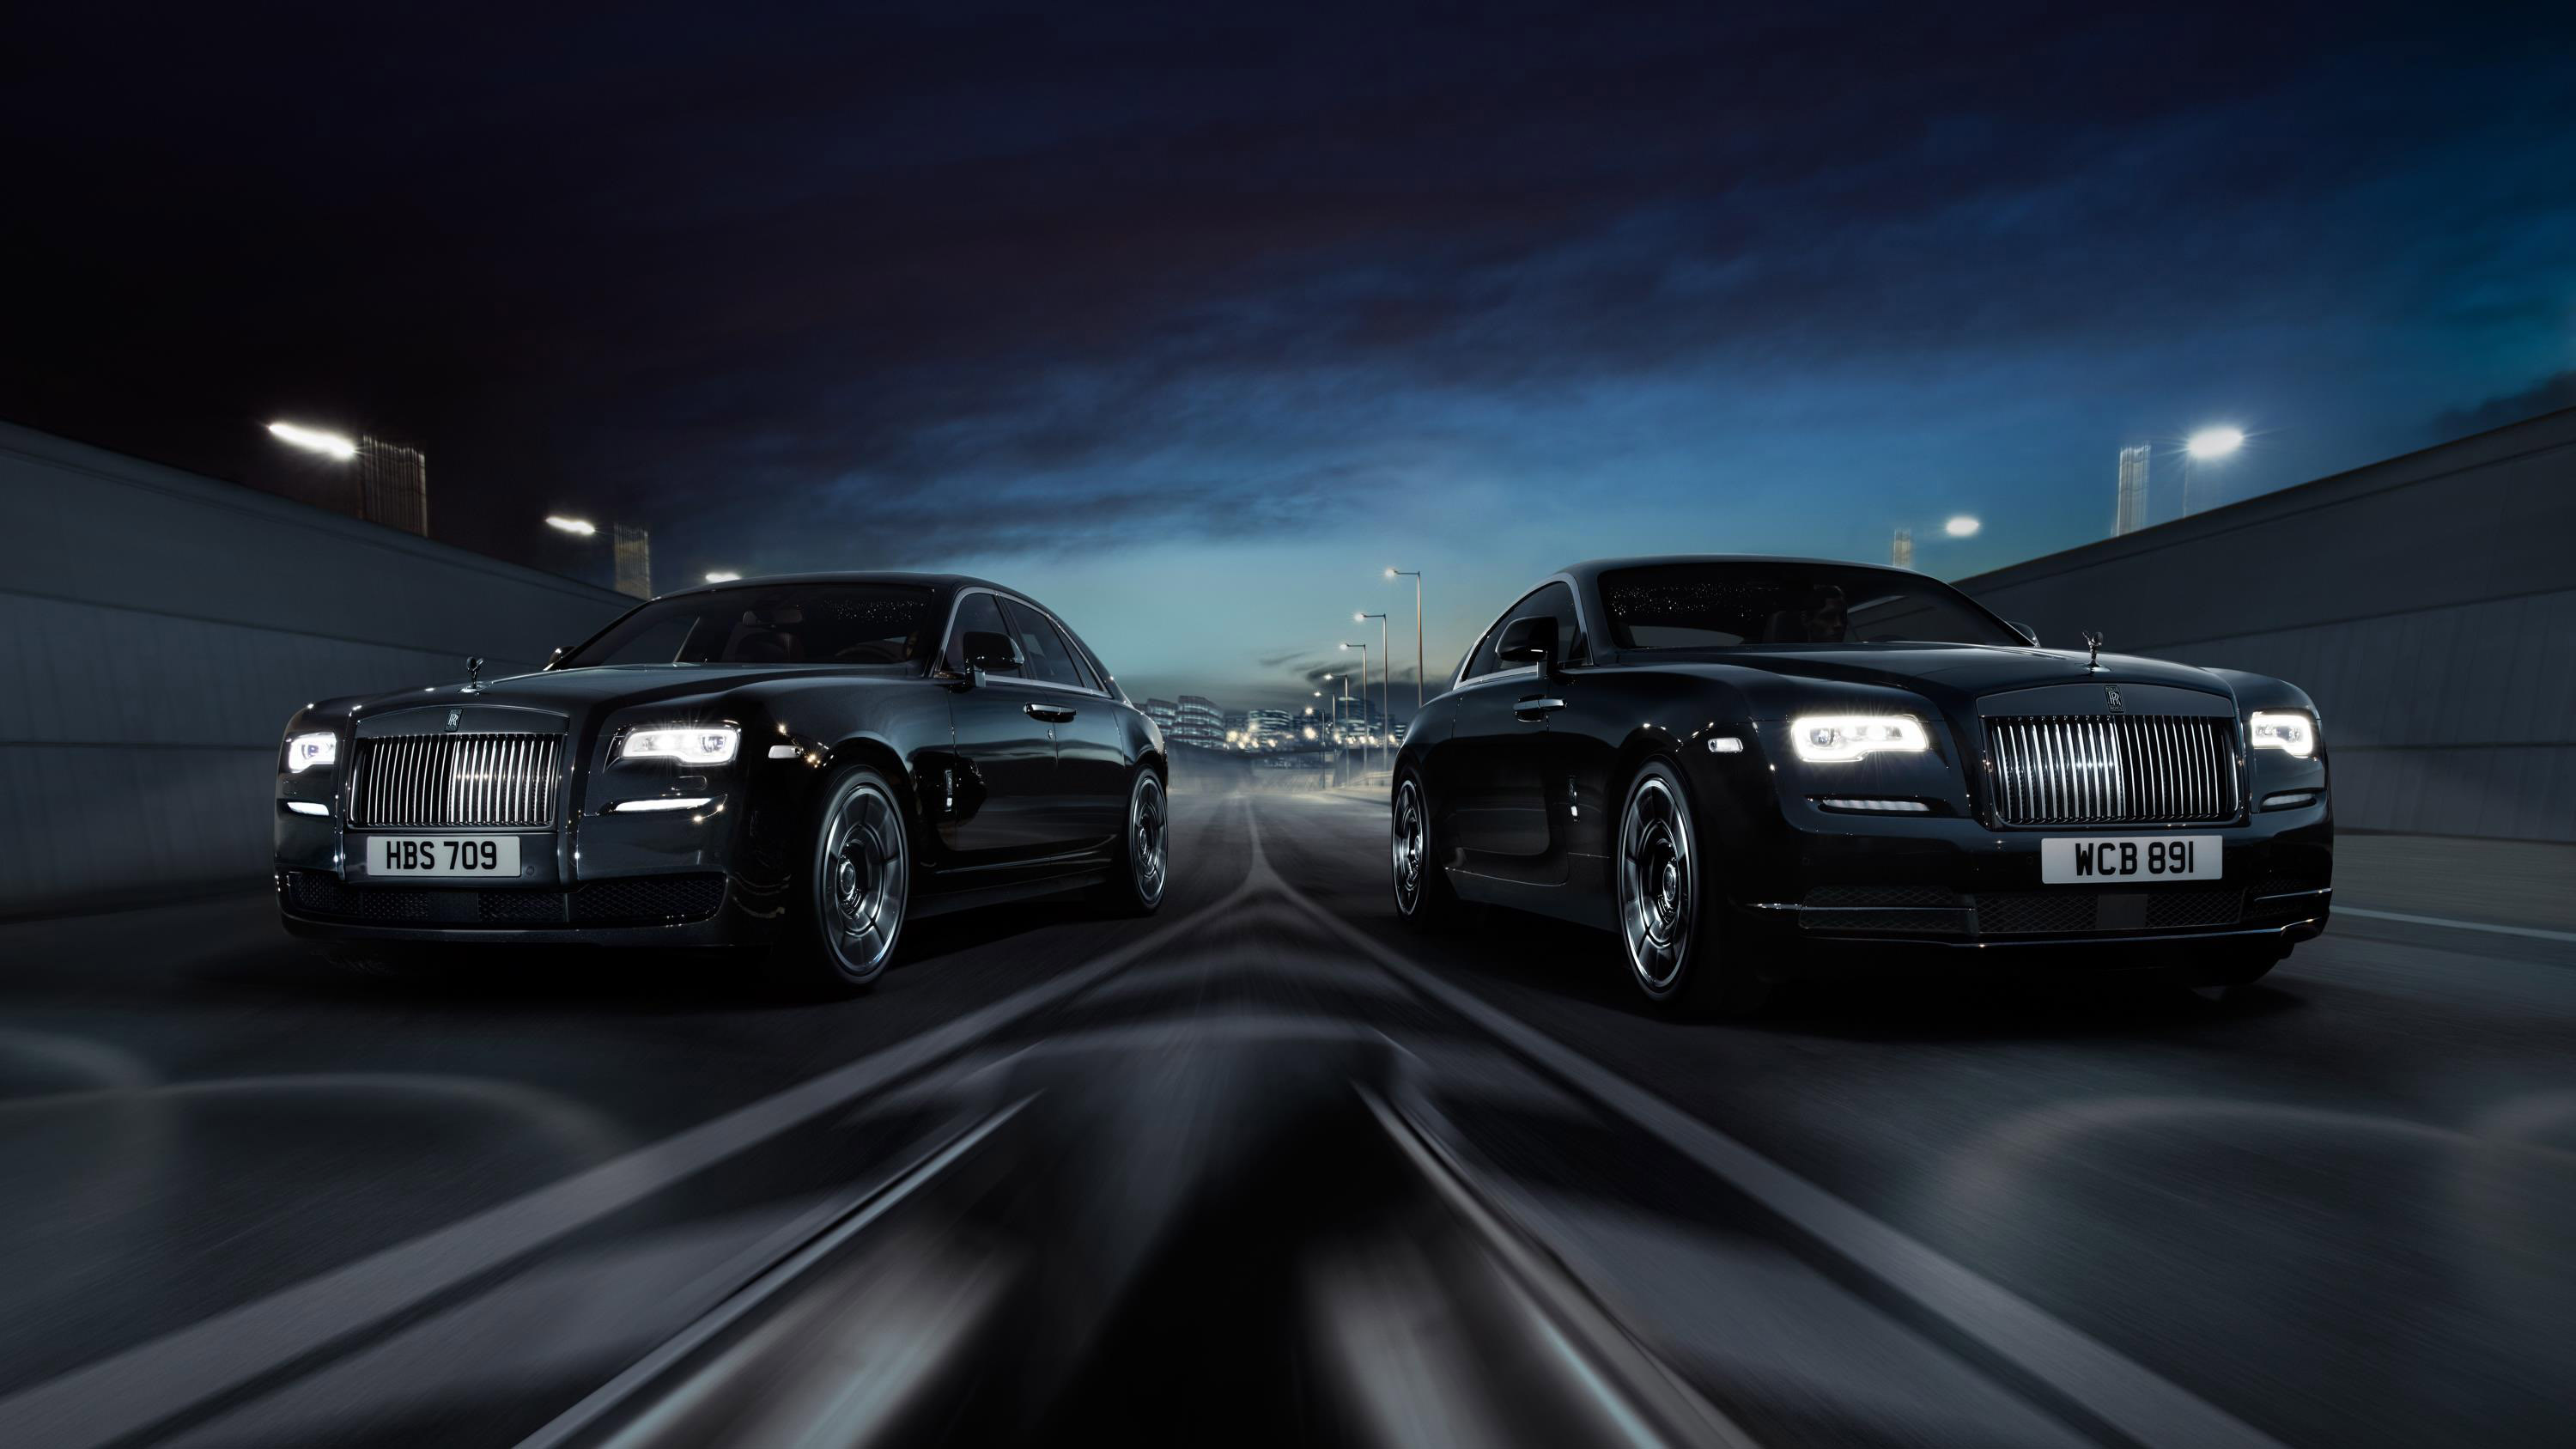 Rolls-Royce Black Badge